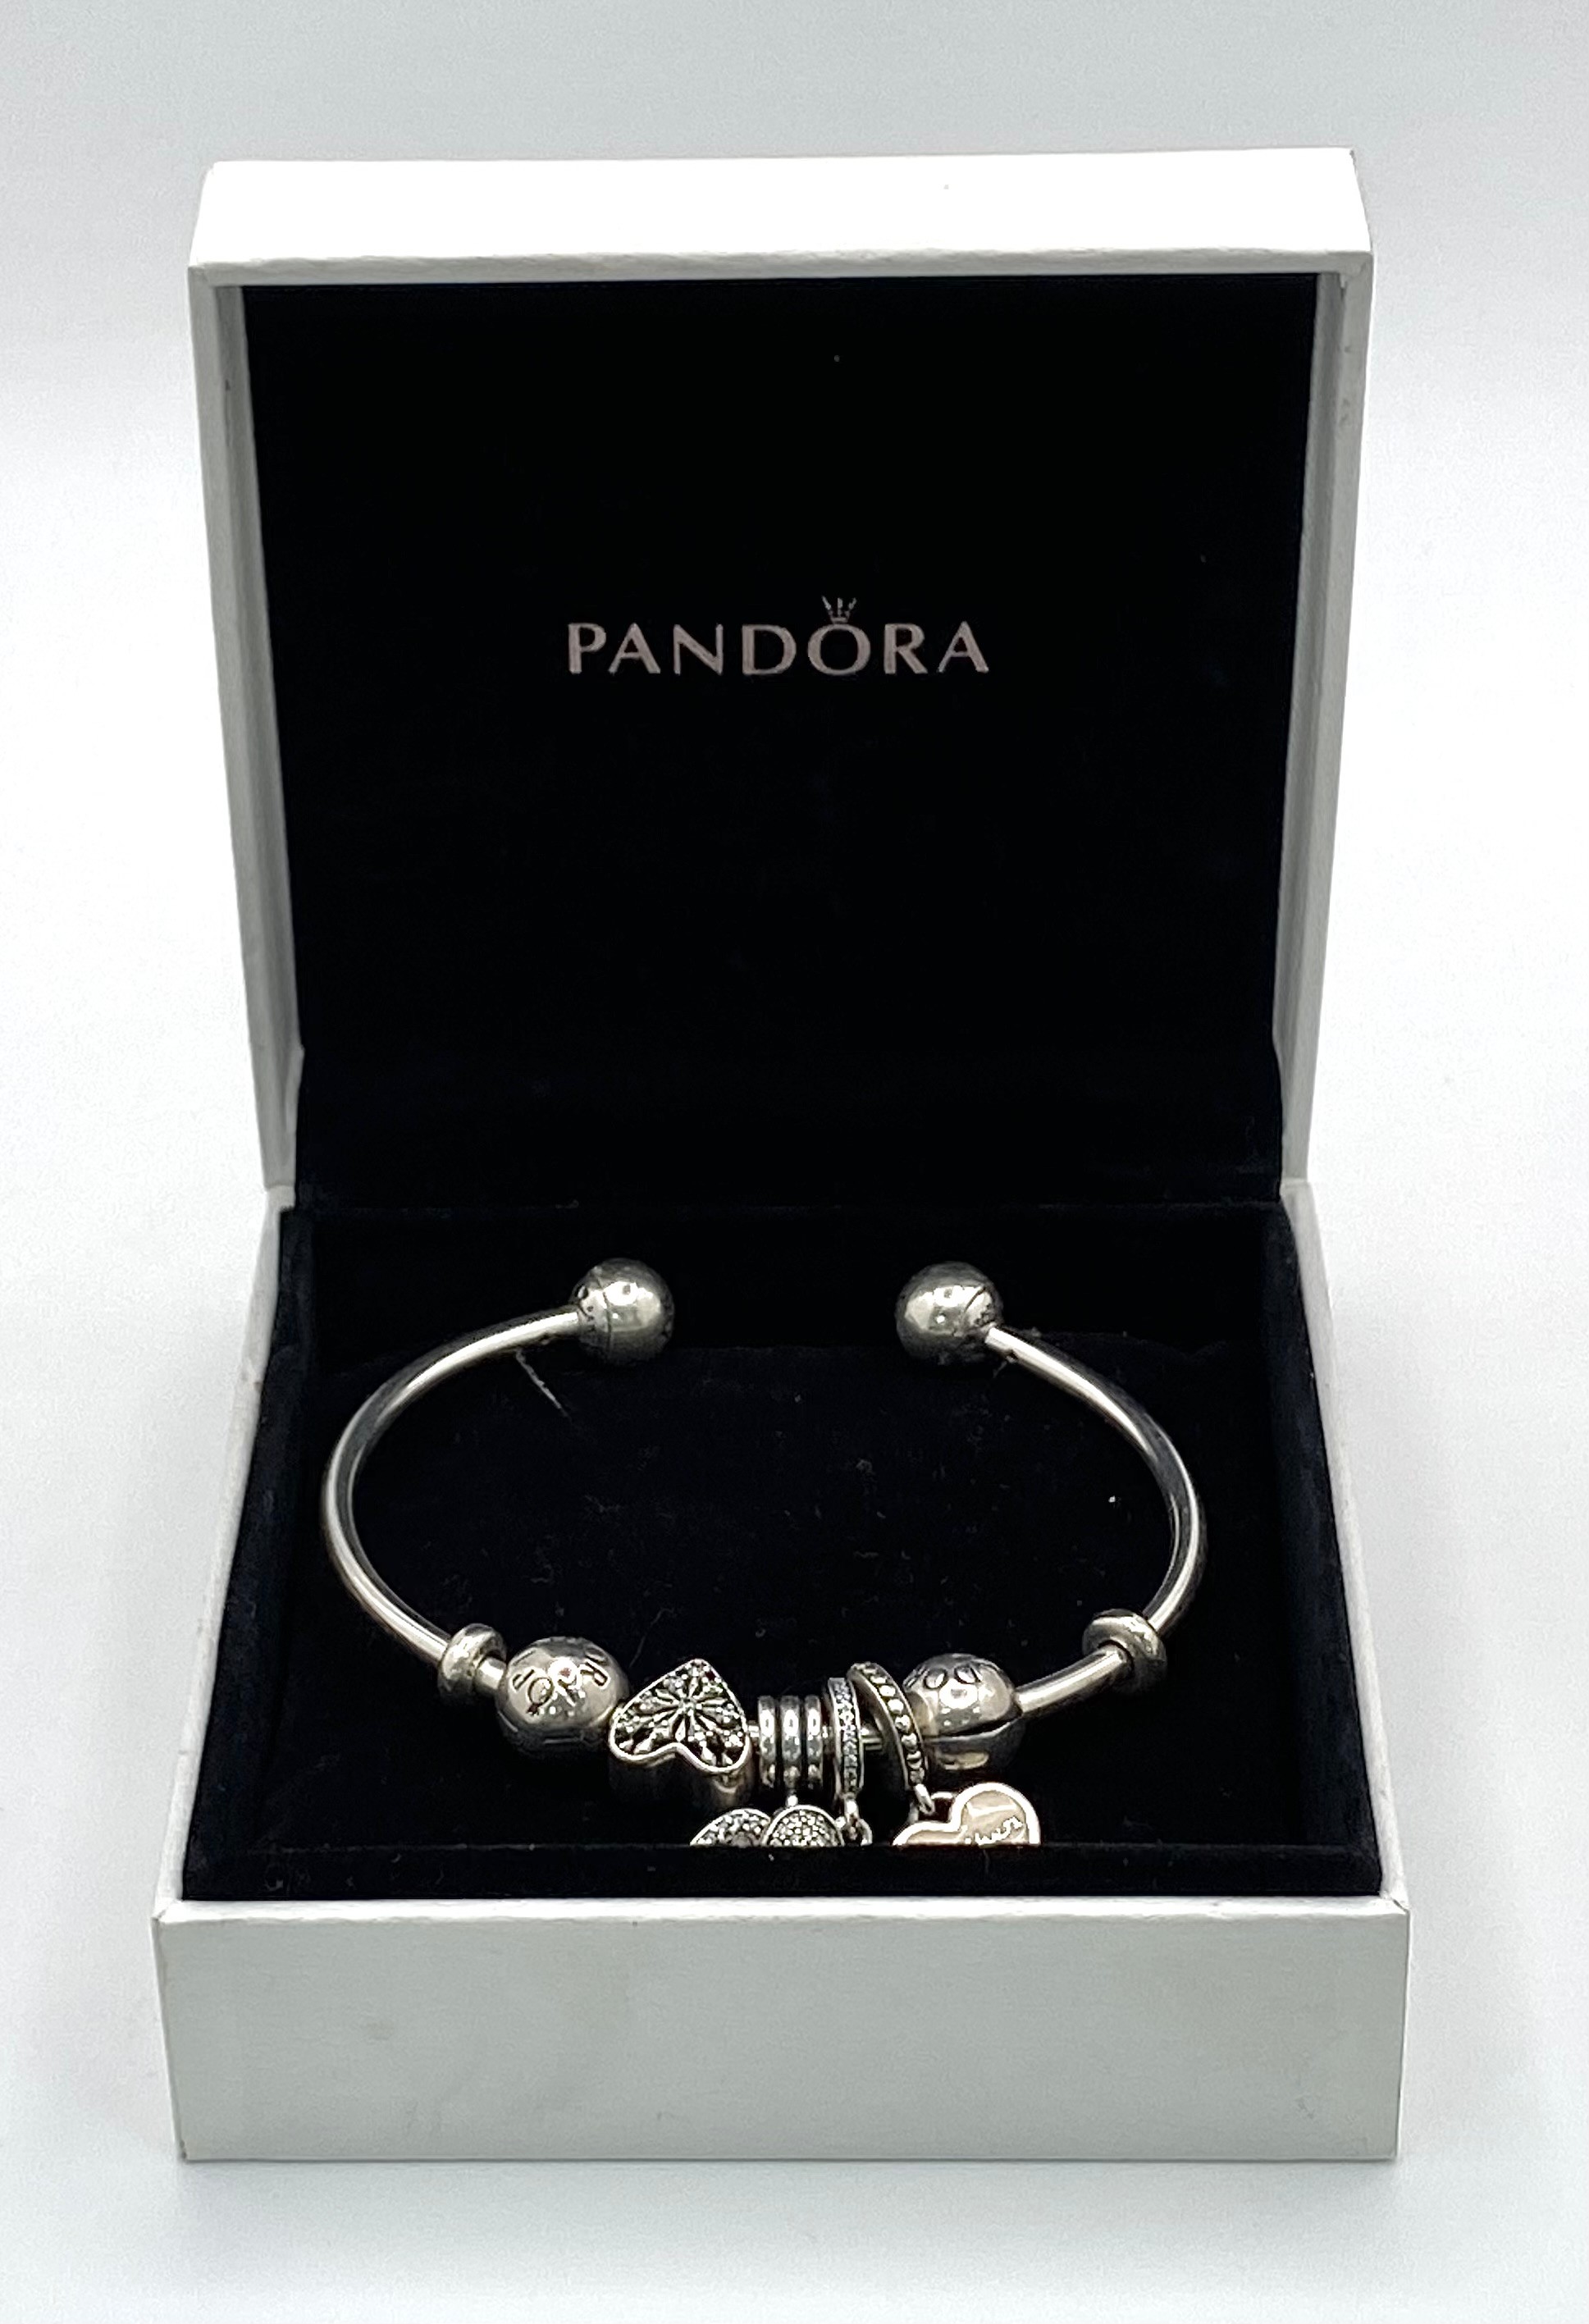 A Pandora 925 Silver Charm Cuff Bangle. Comes with a Pandora presentation case. - Image 4 of 4